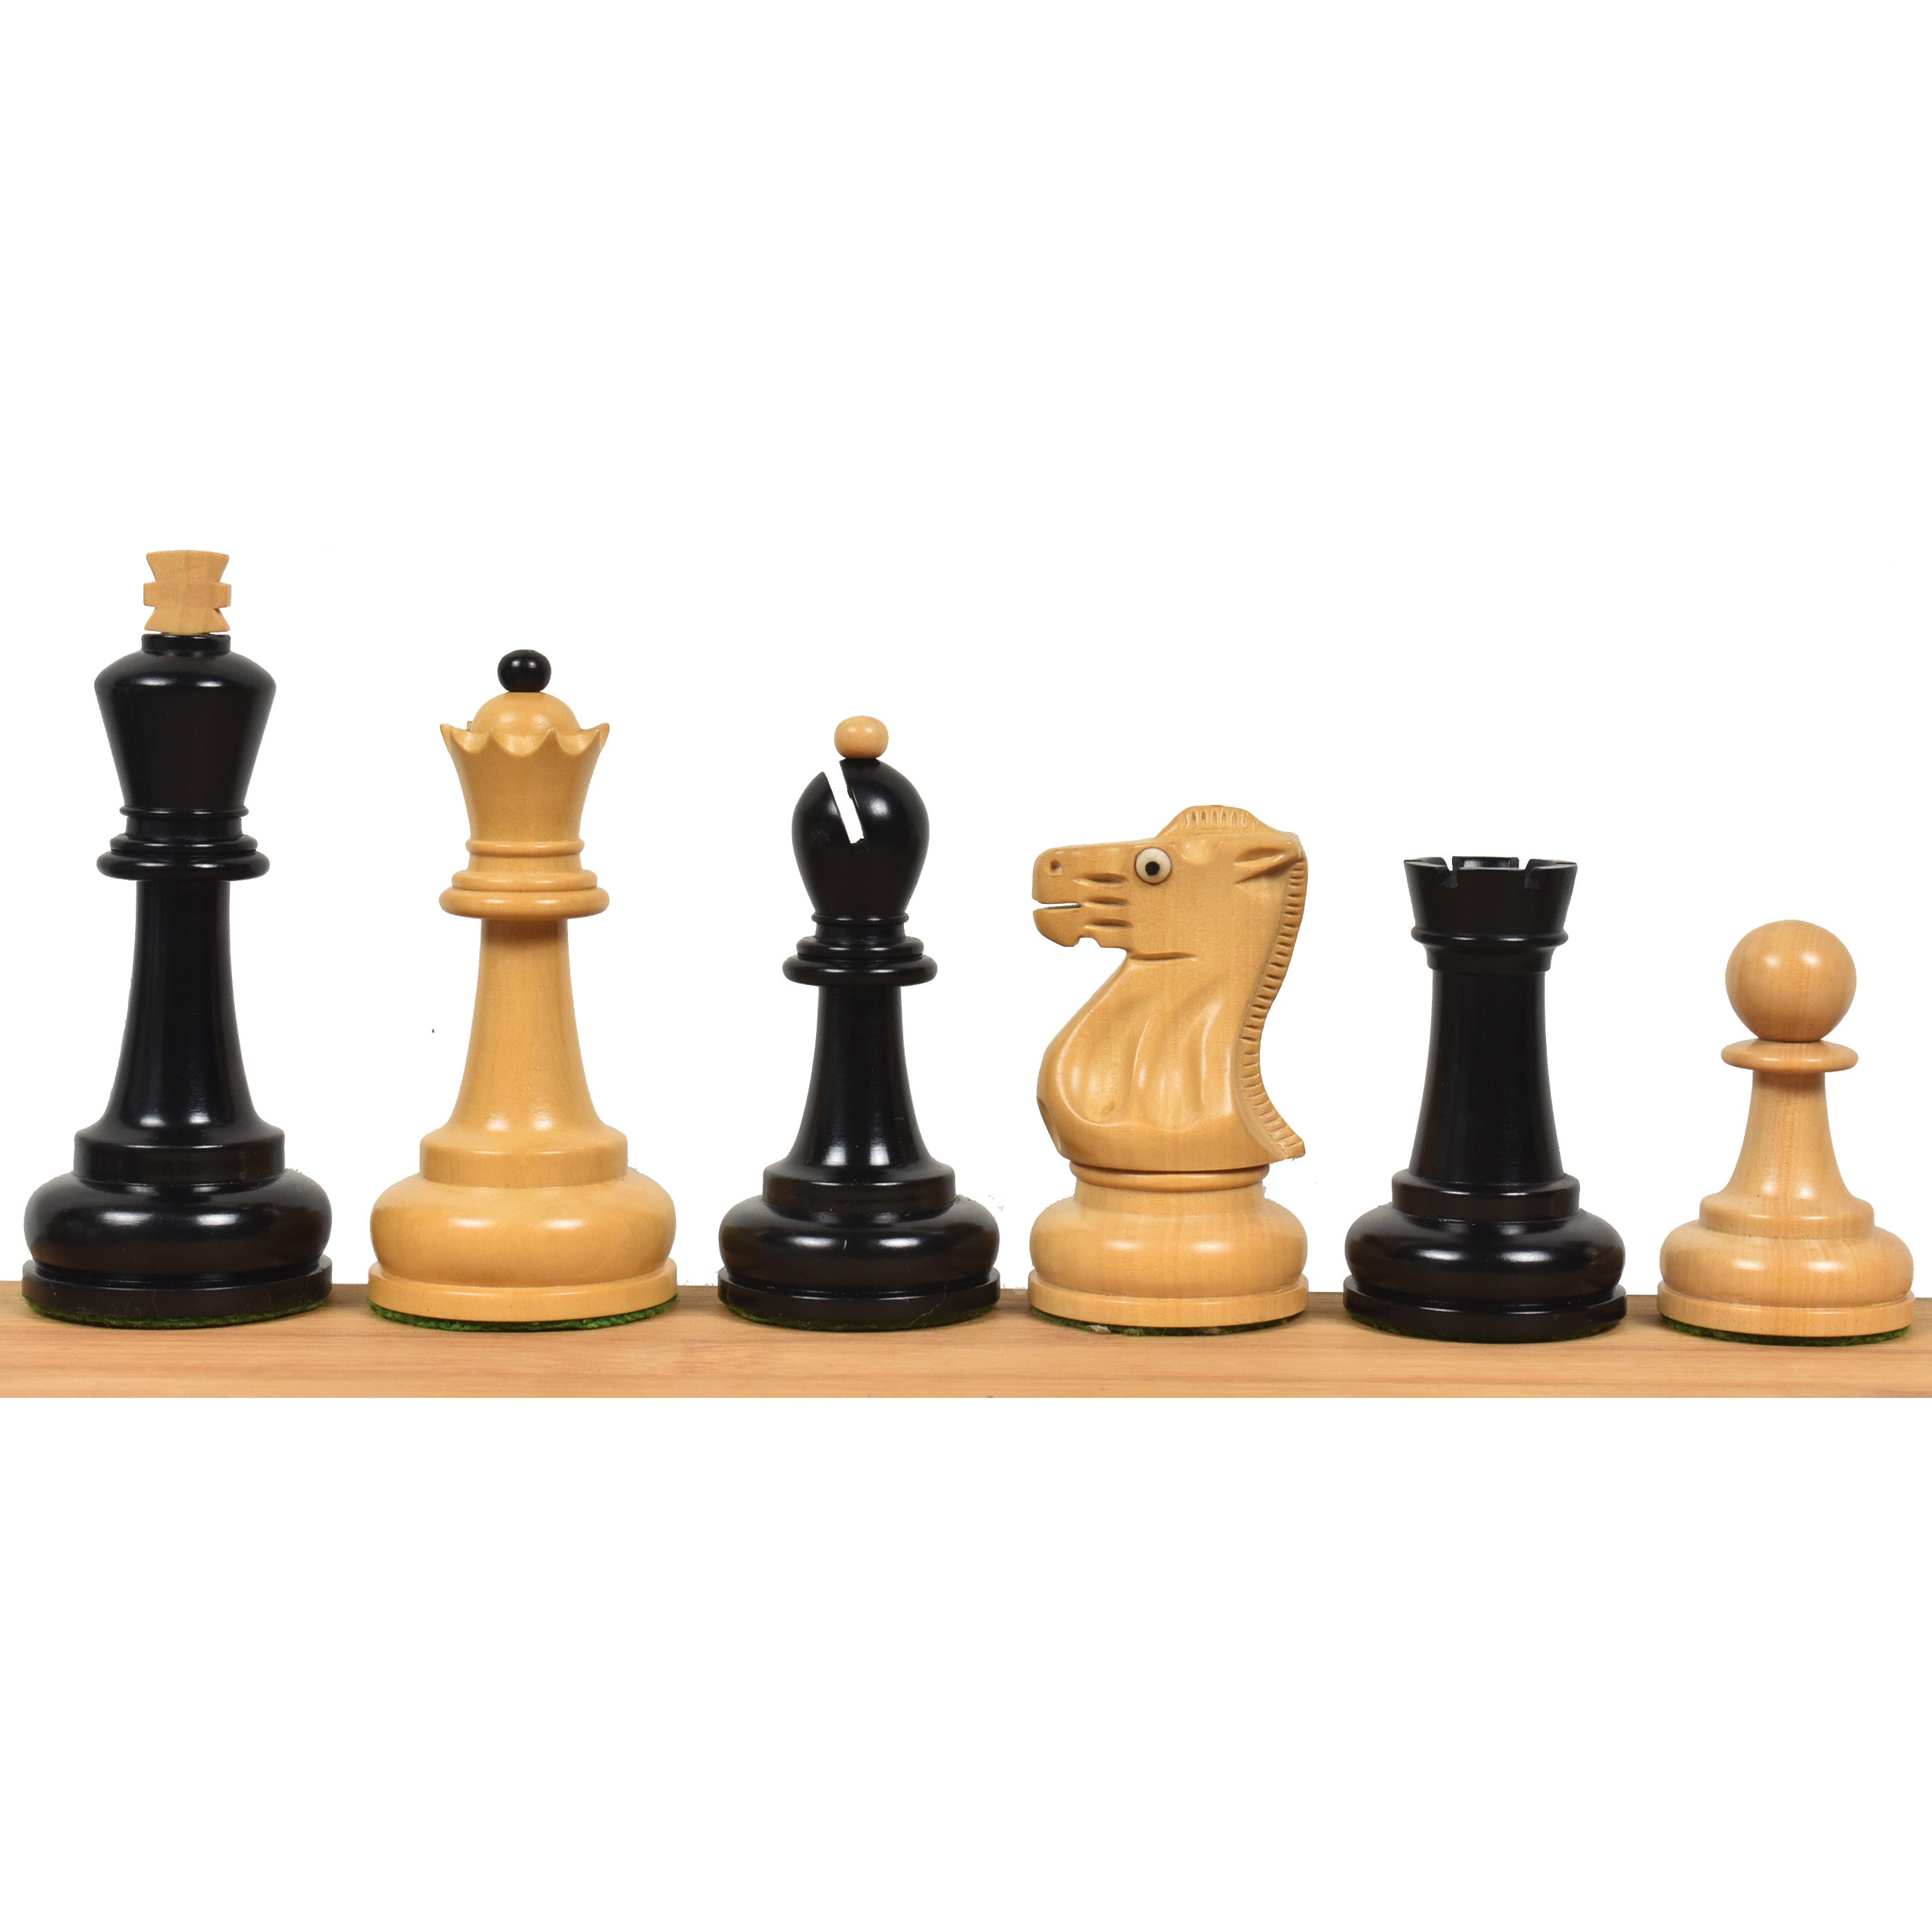  House of Chess - Grand Master Staunton Tournament